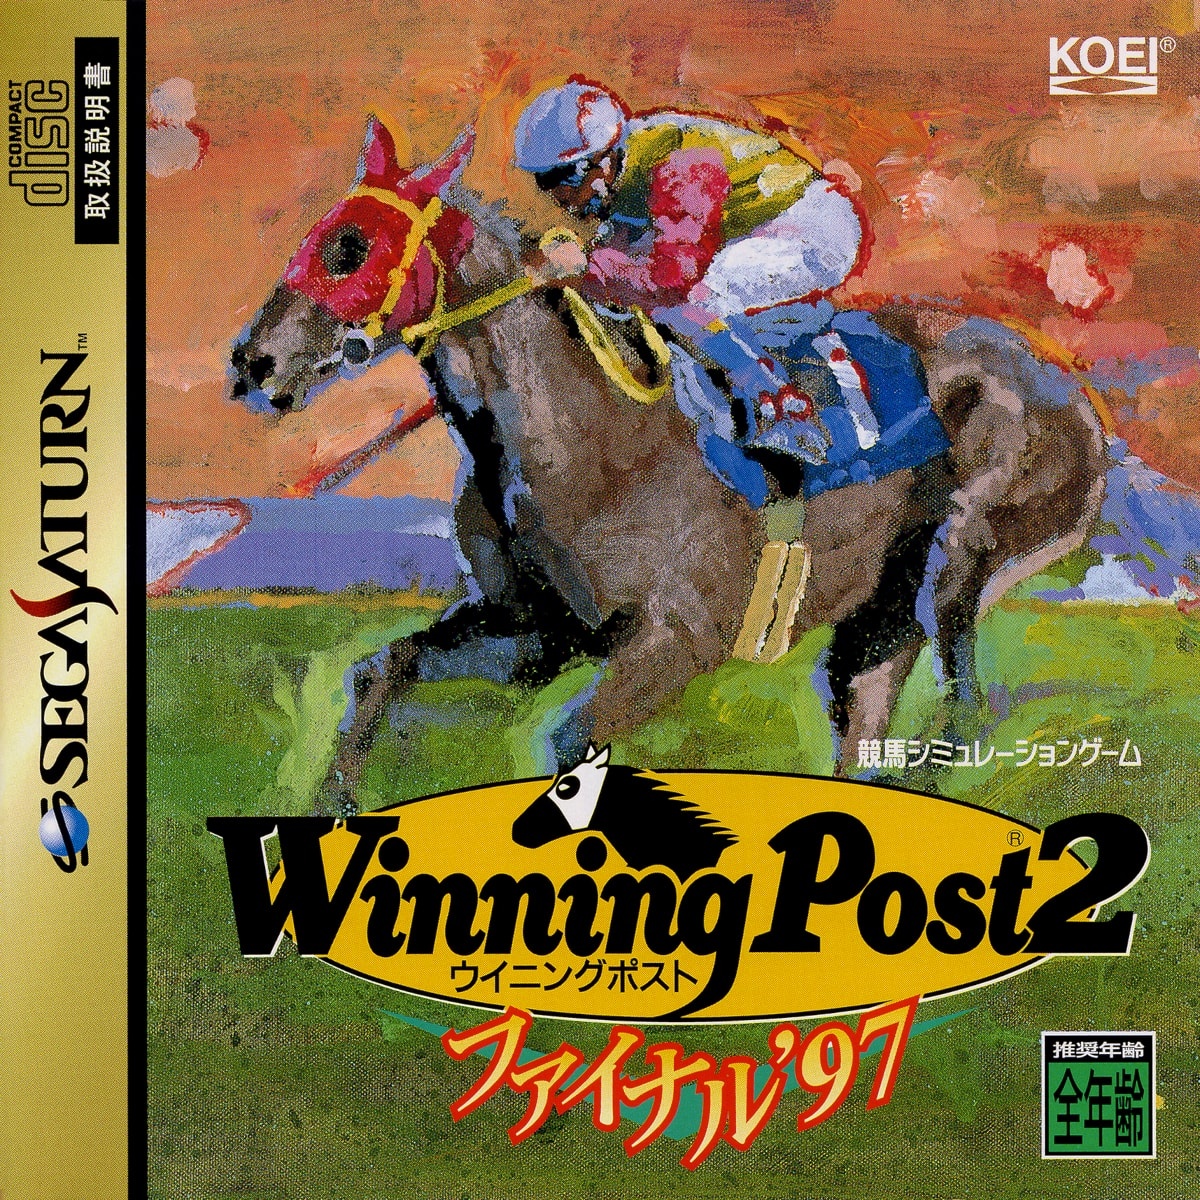 Capa do jogo Winning Post 2 Final 97